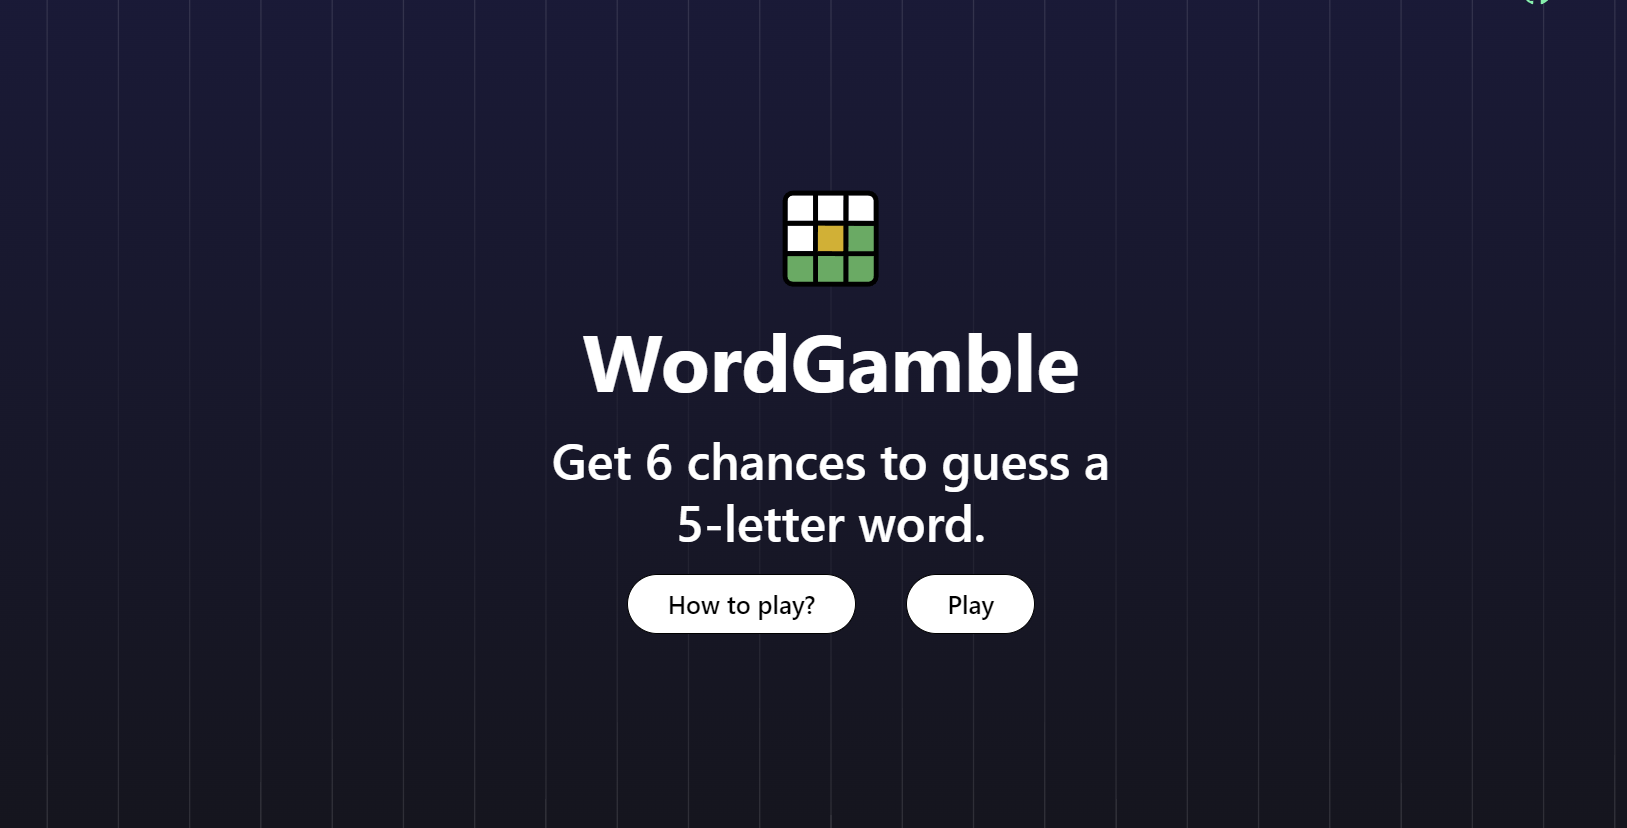 Word Gamble